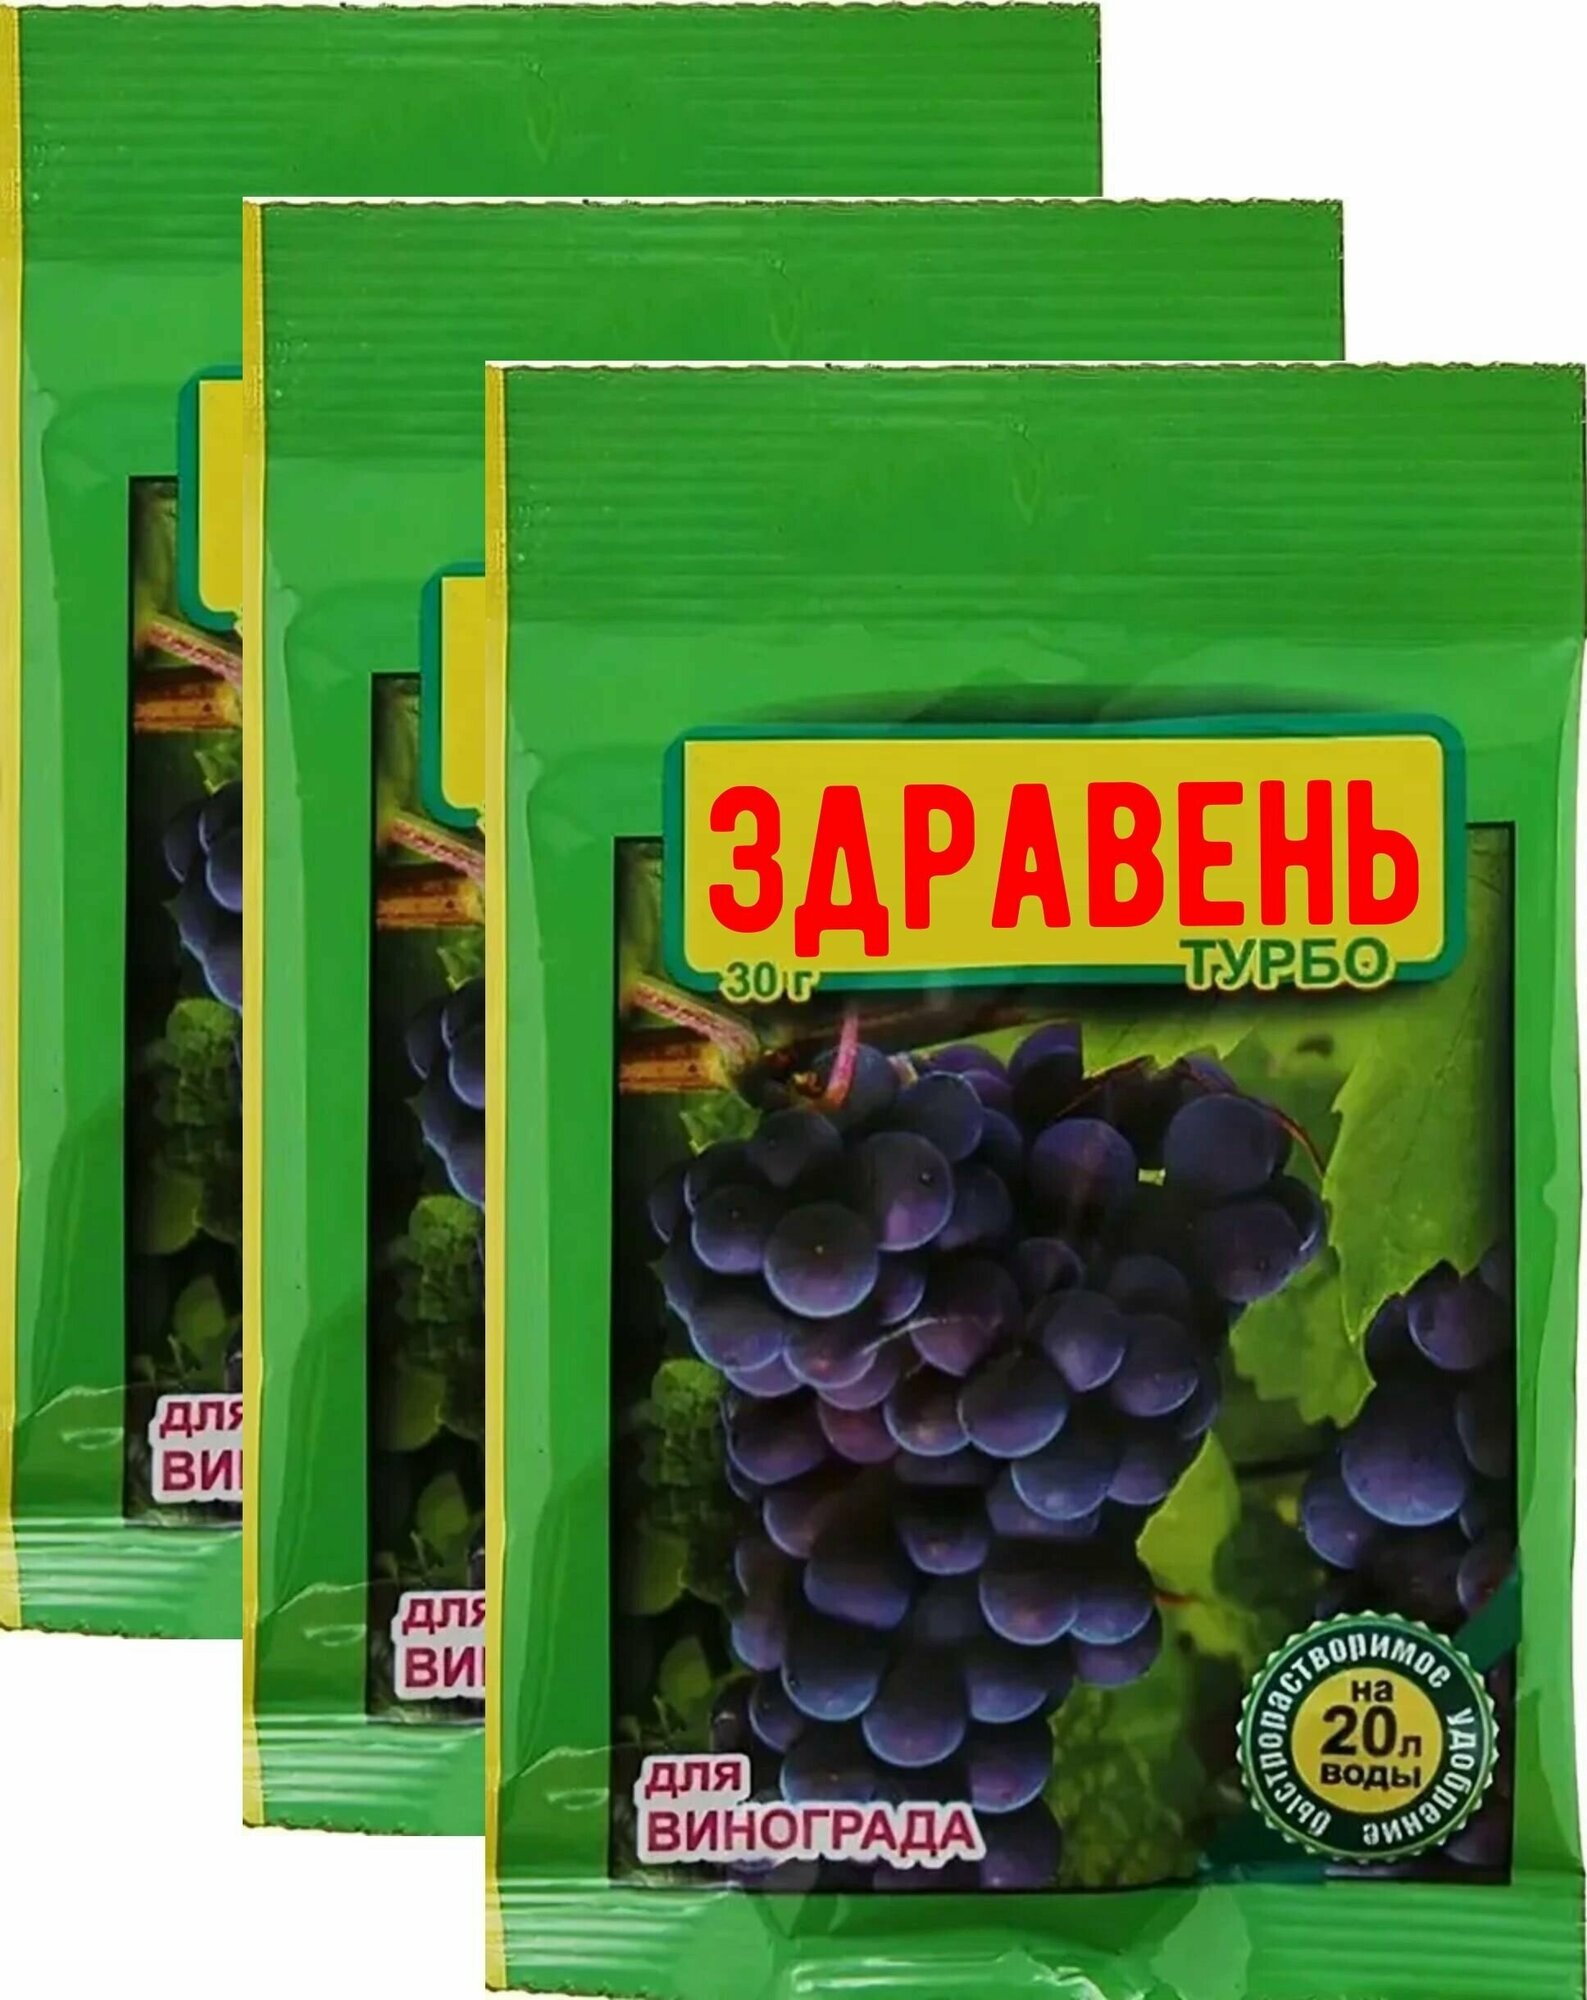 Здравень для Винограда, 30 грамм, Ваше хозяйство - 3 пачки - фотография № 4